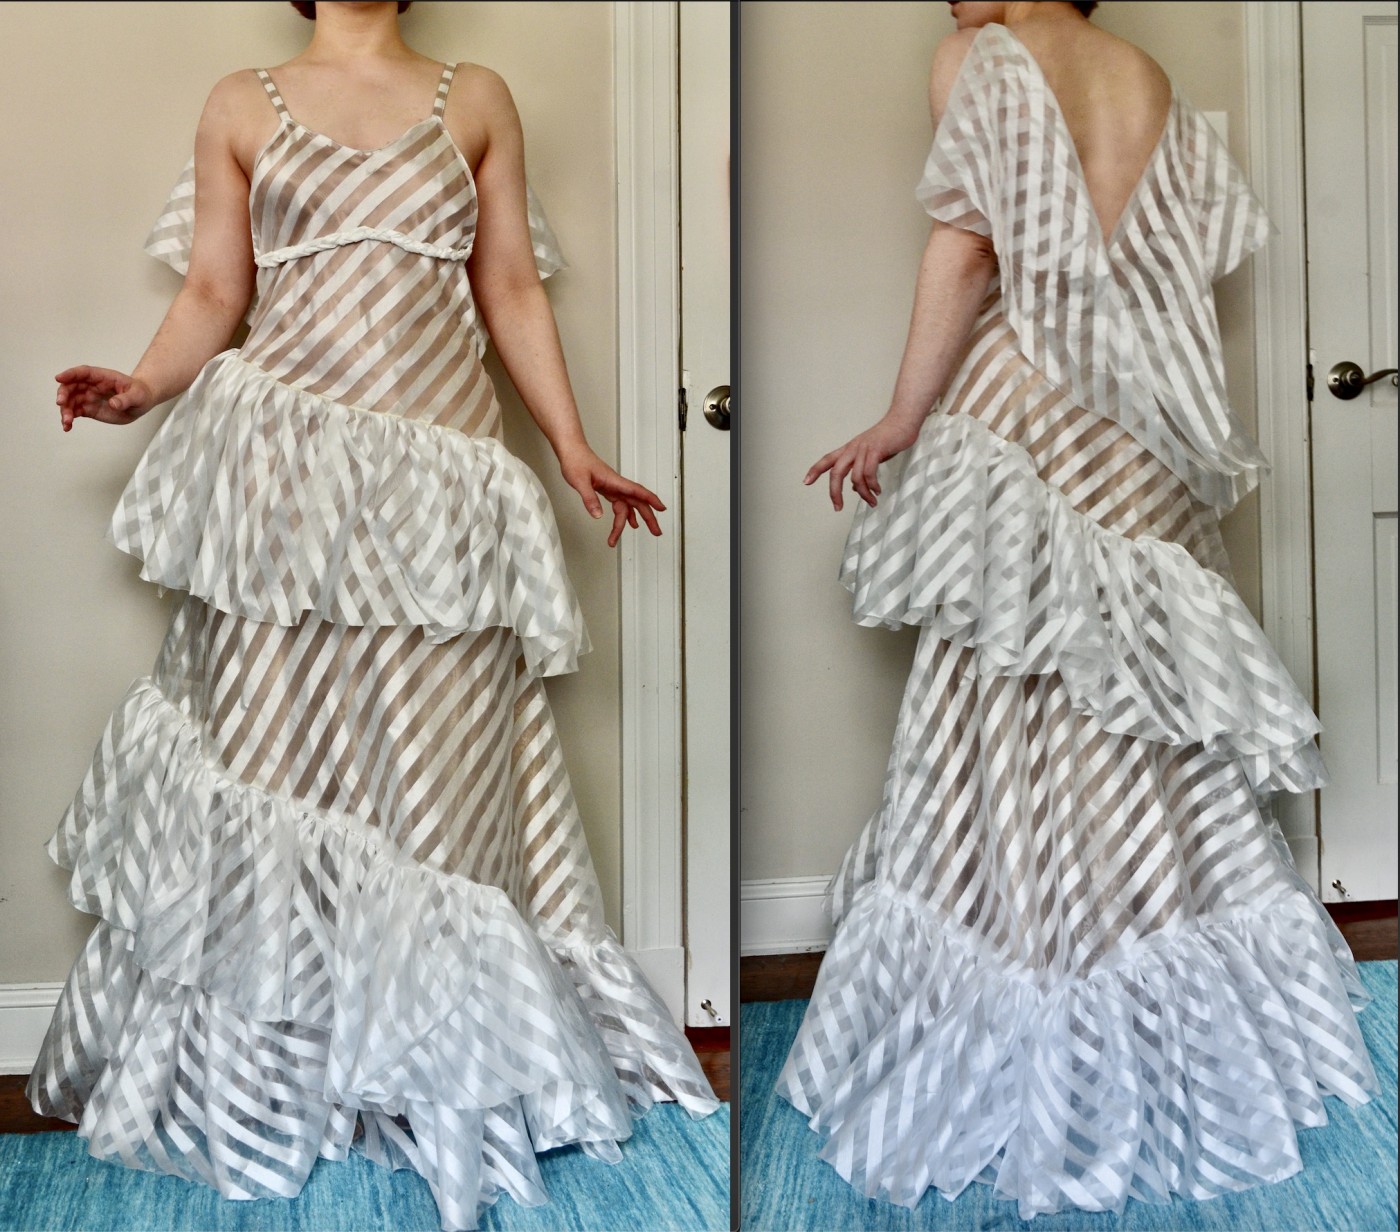 Figure 2: Dress Front and Back, Image courtesy of Madeleine Morgan, November 2020. 